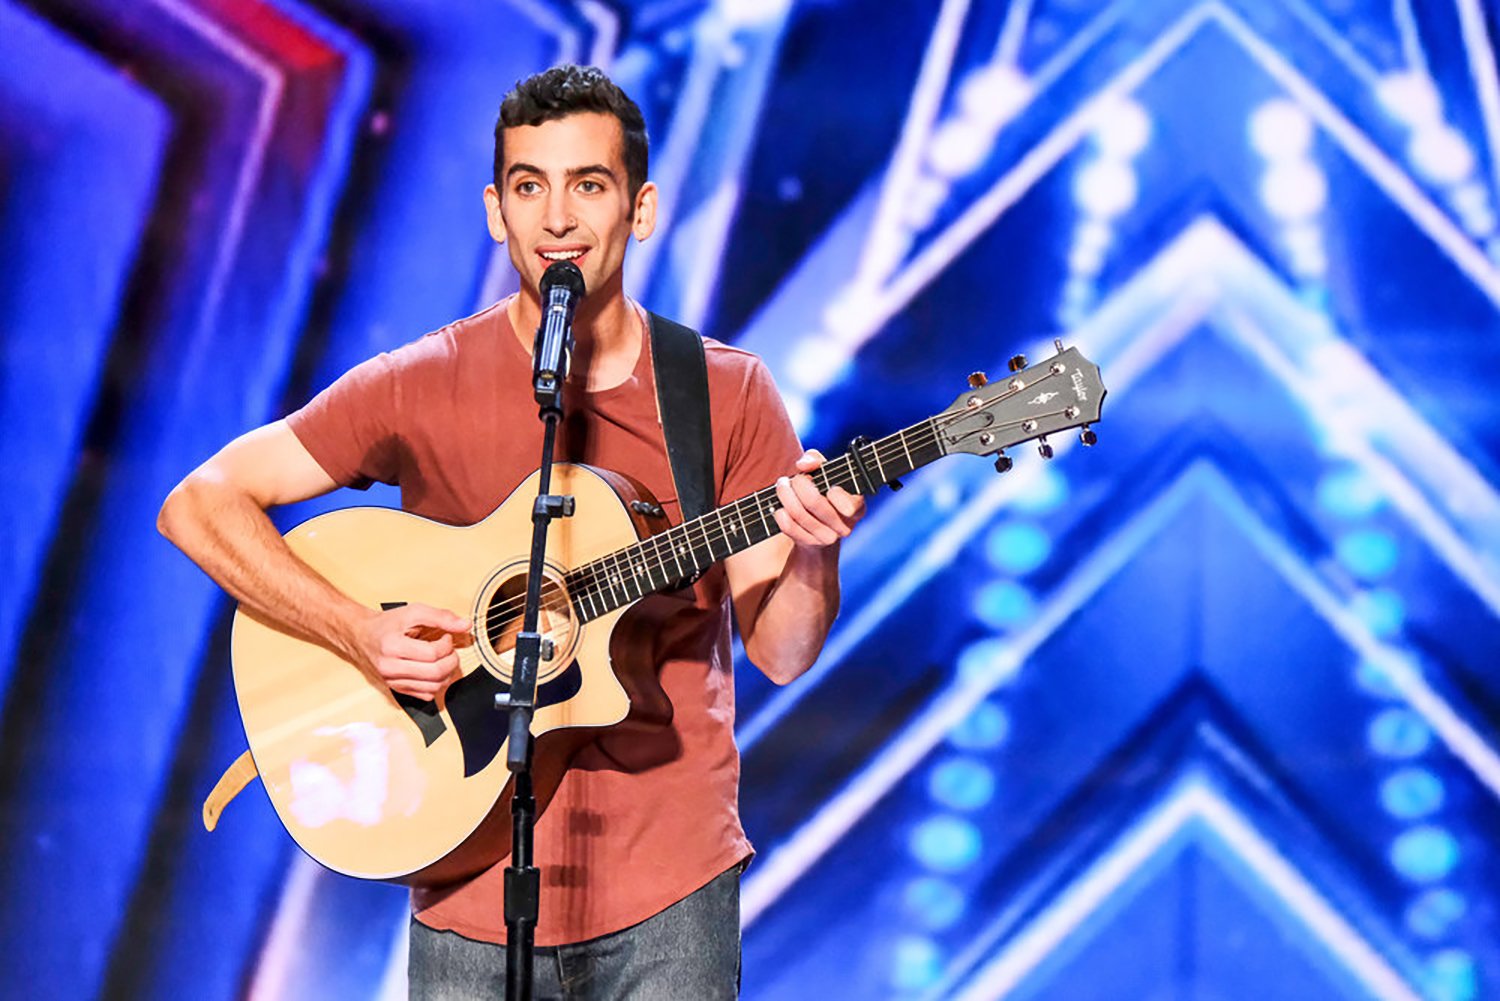 Ben Lapidus sings Parmesan Cheese on America's Got Talent